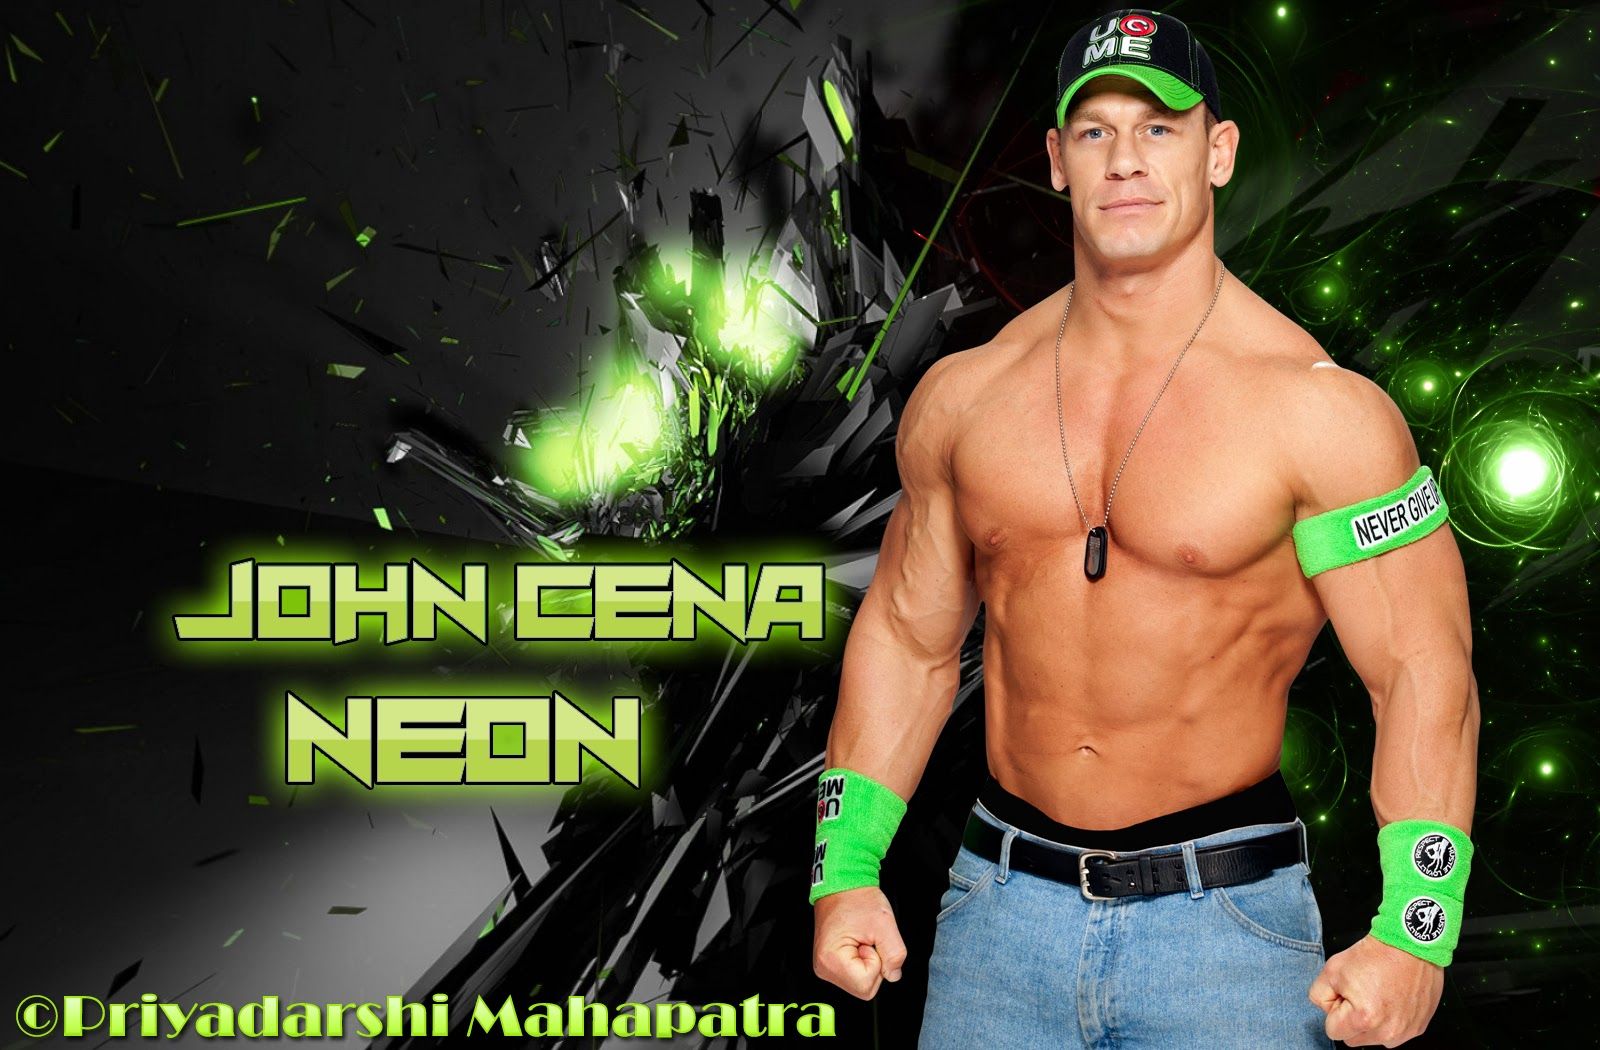 No Trouble John Cena Image Download